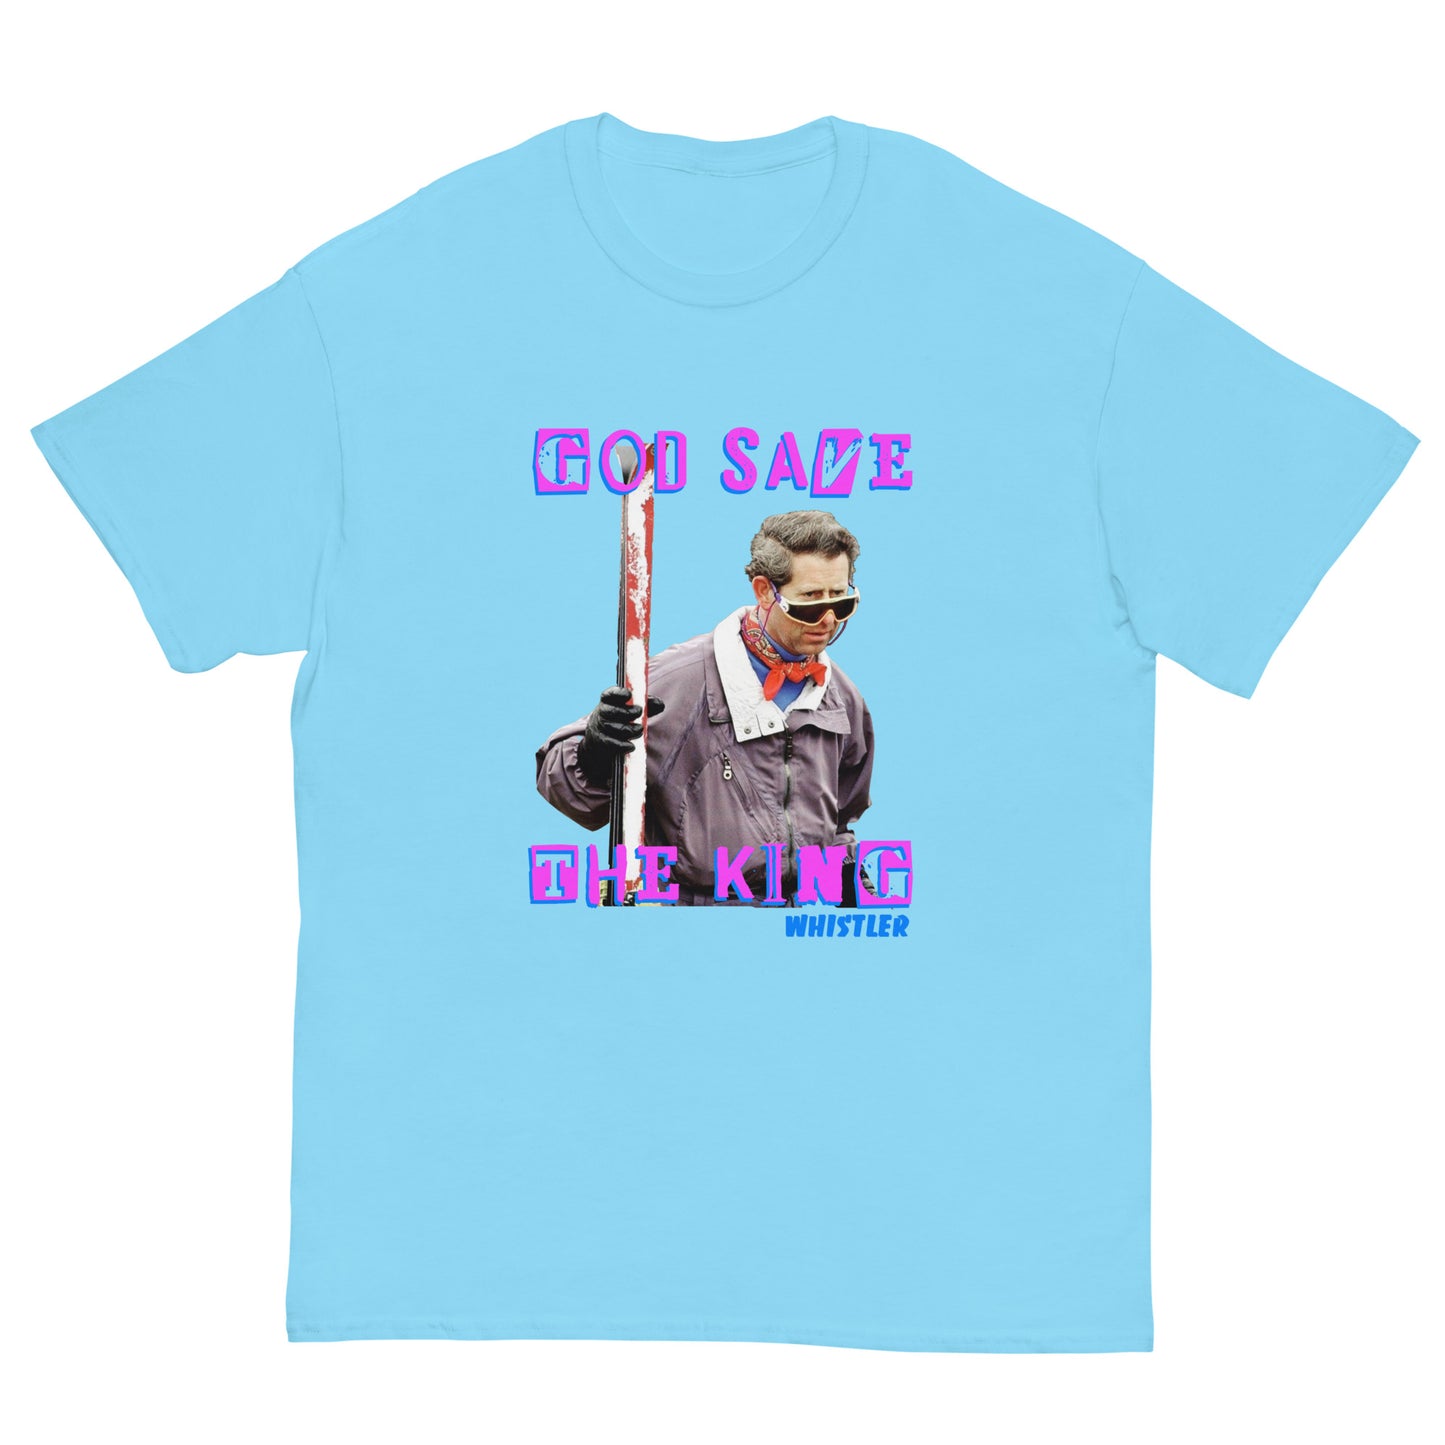 printed t-shirt god save the king whistler blue